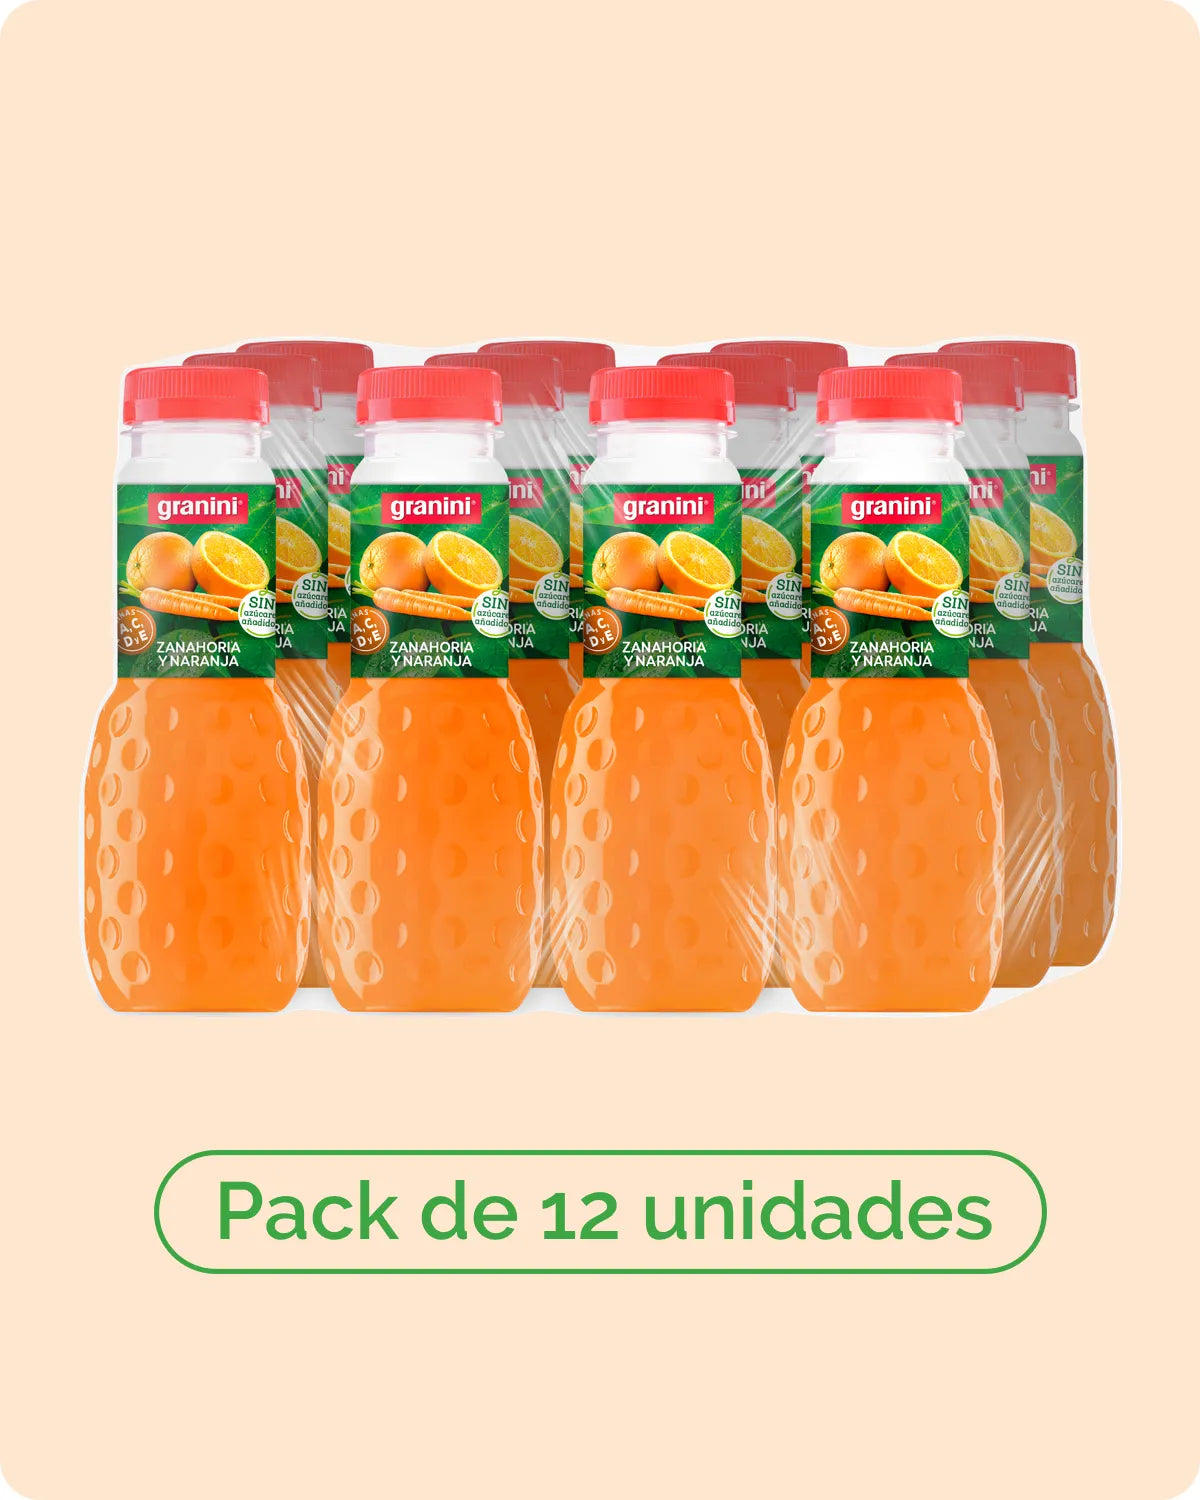 
                  
                    Zanahoria y naranja - Para llevar - Pack 12 (12x0,33L)
                  
                